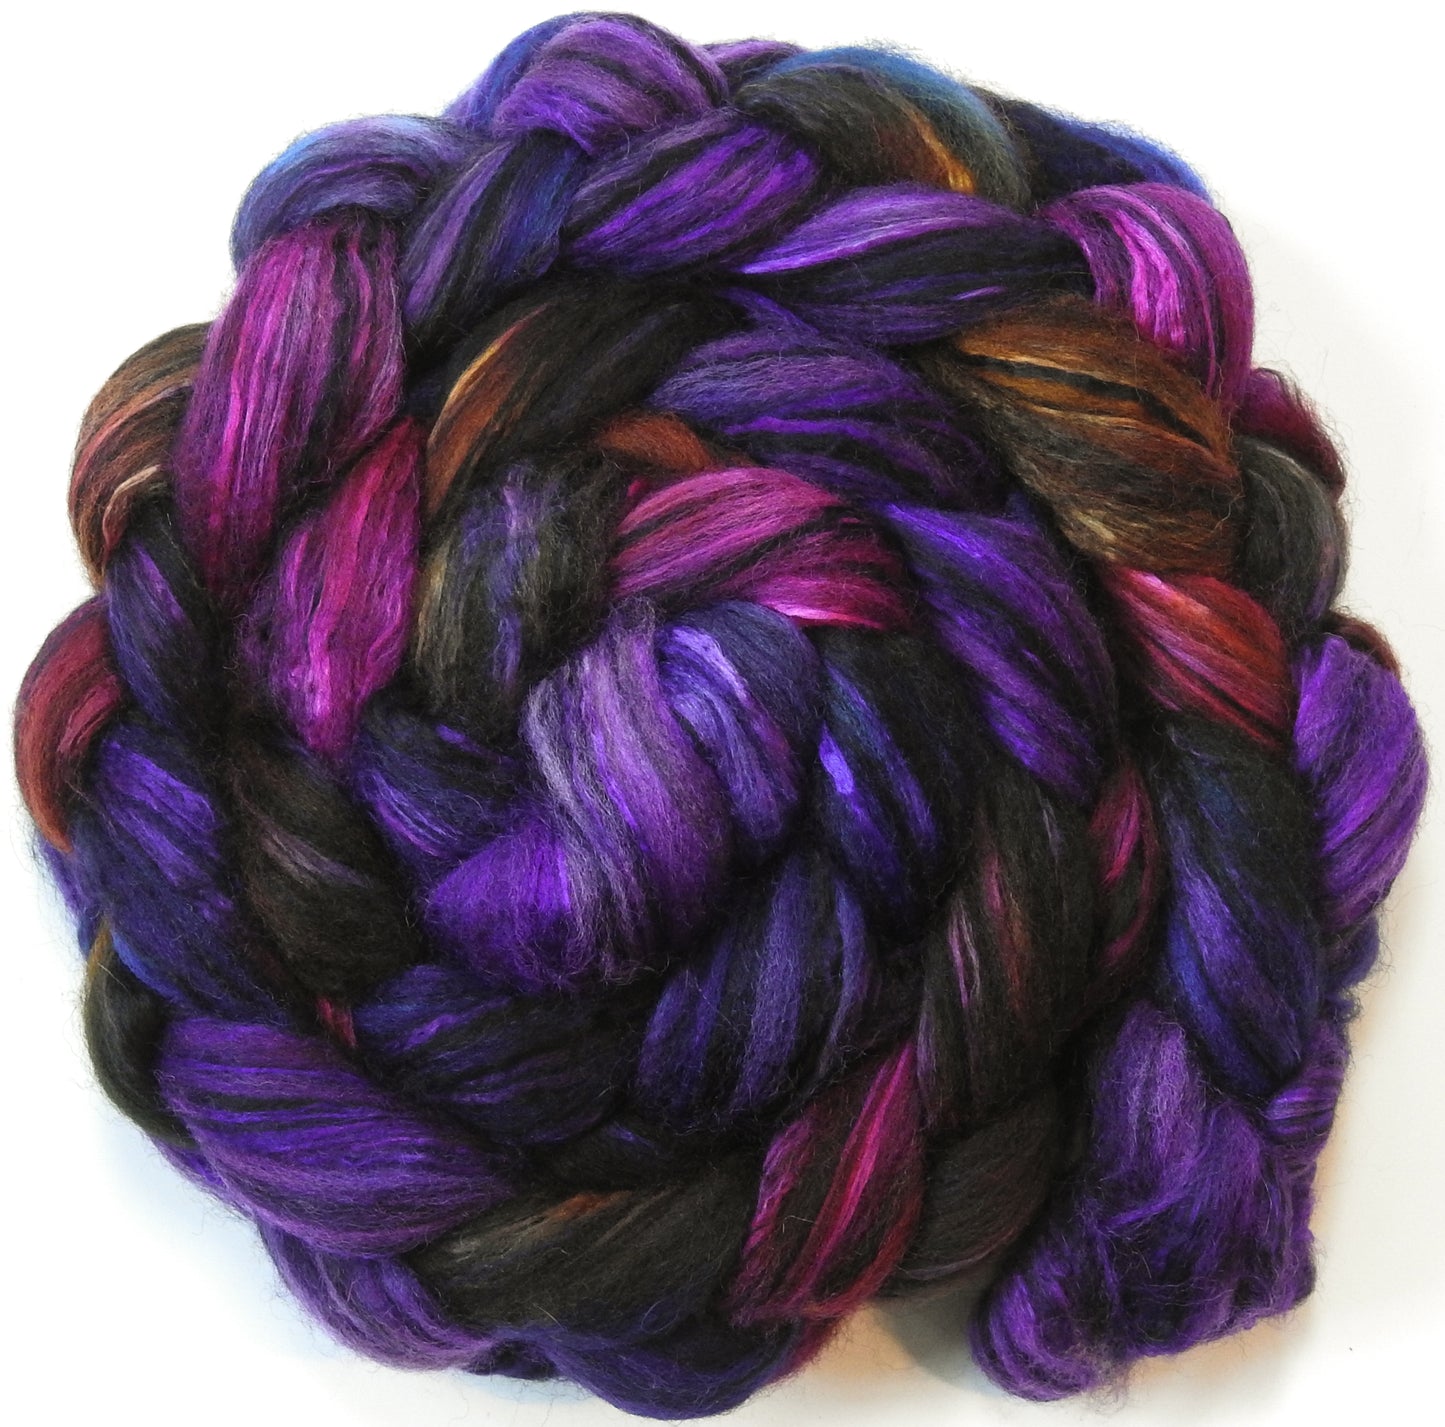 Esther (5.4 oz) Batt in a Braid #55- Shetland/ Mulberry Silk/ Black Bamboo (50/25/25)